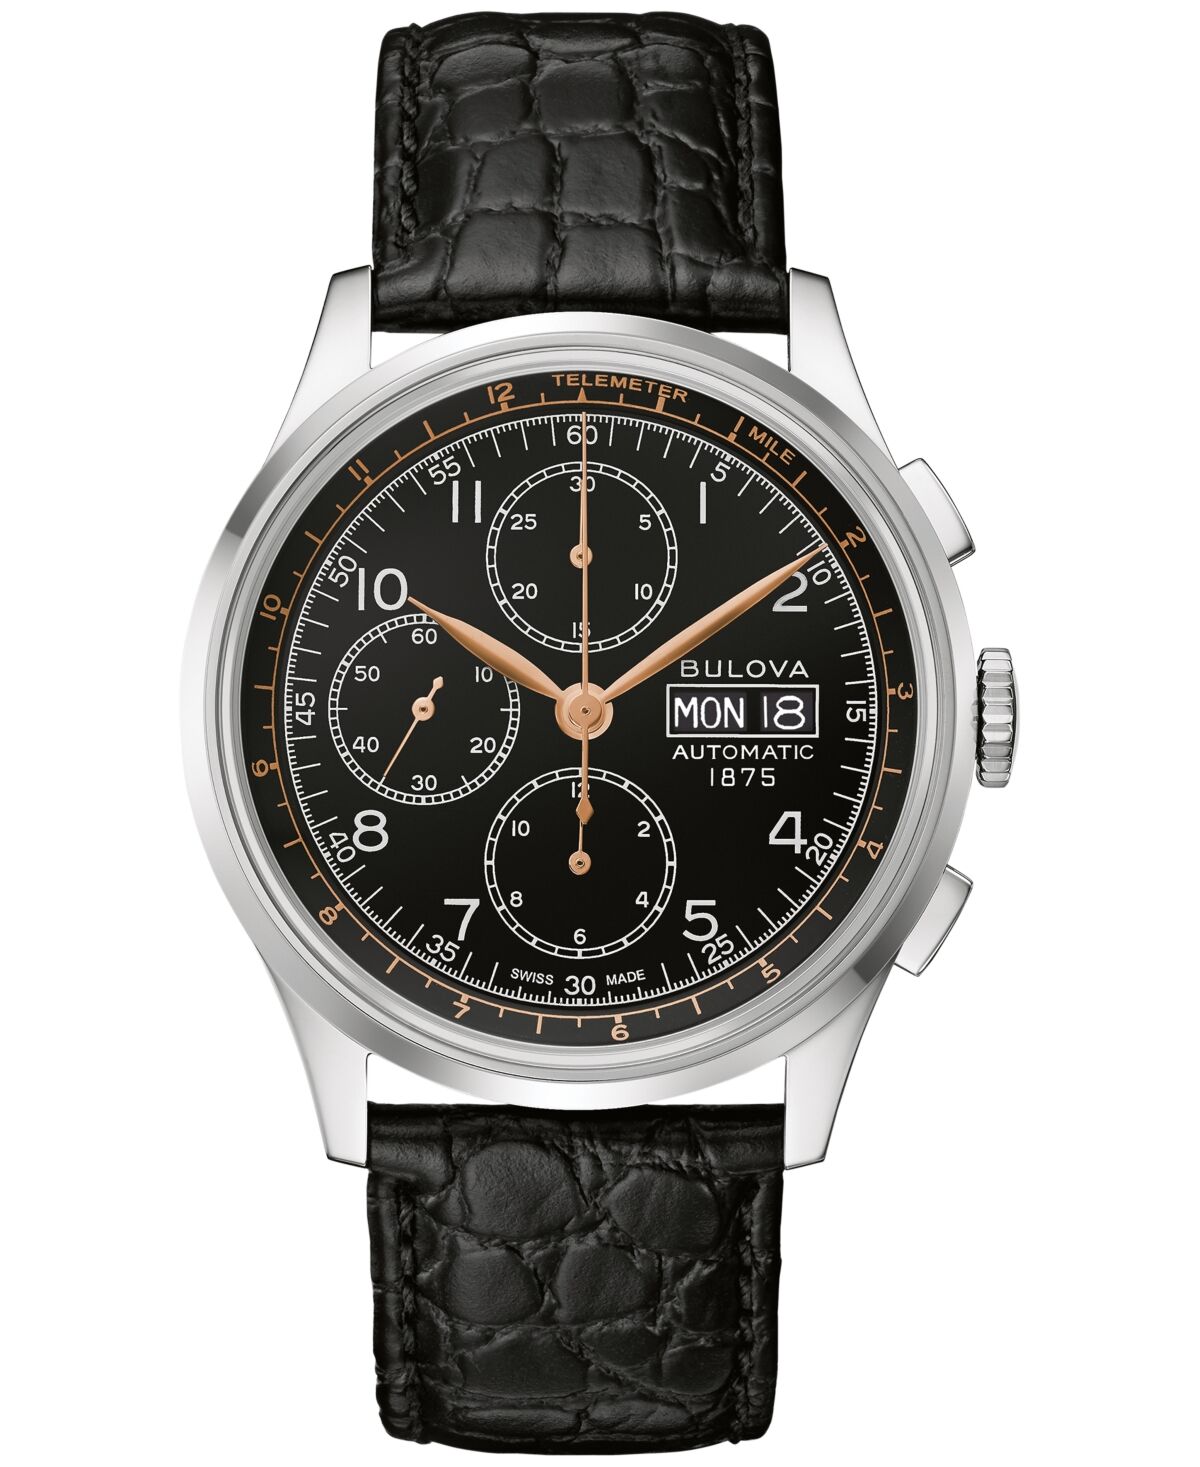 Bulova Men's Swiss Automatic Chronograph Joseph Bulova Black Leather Strap Watch 42mm - Silver